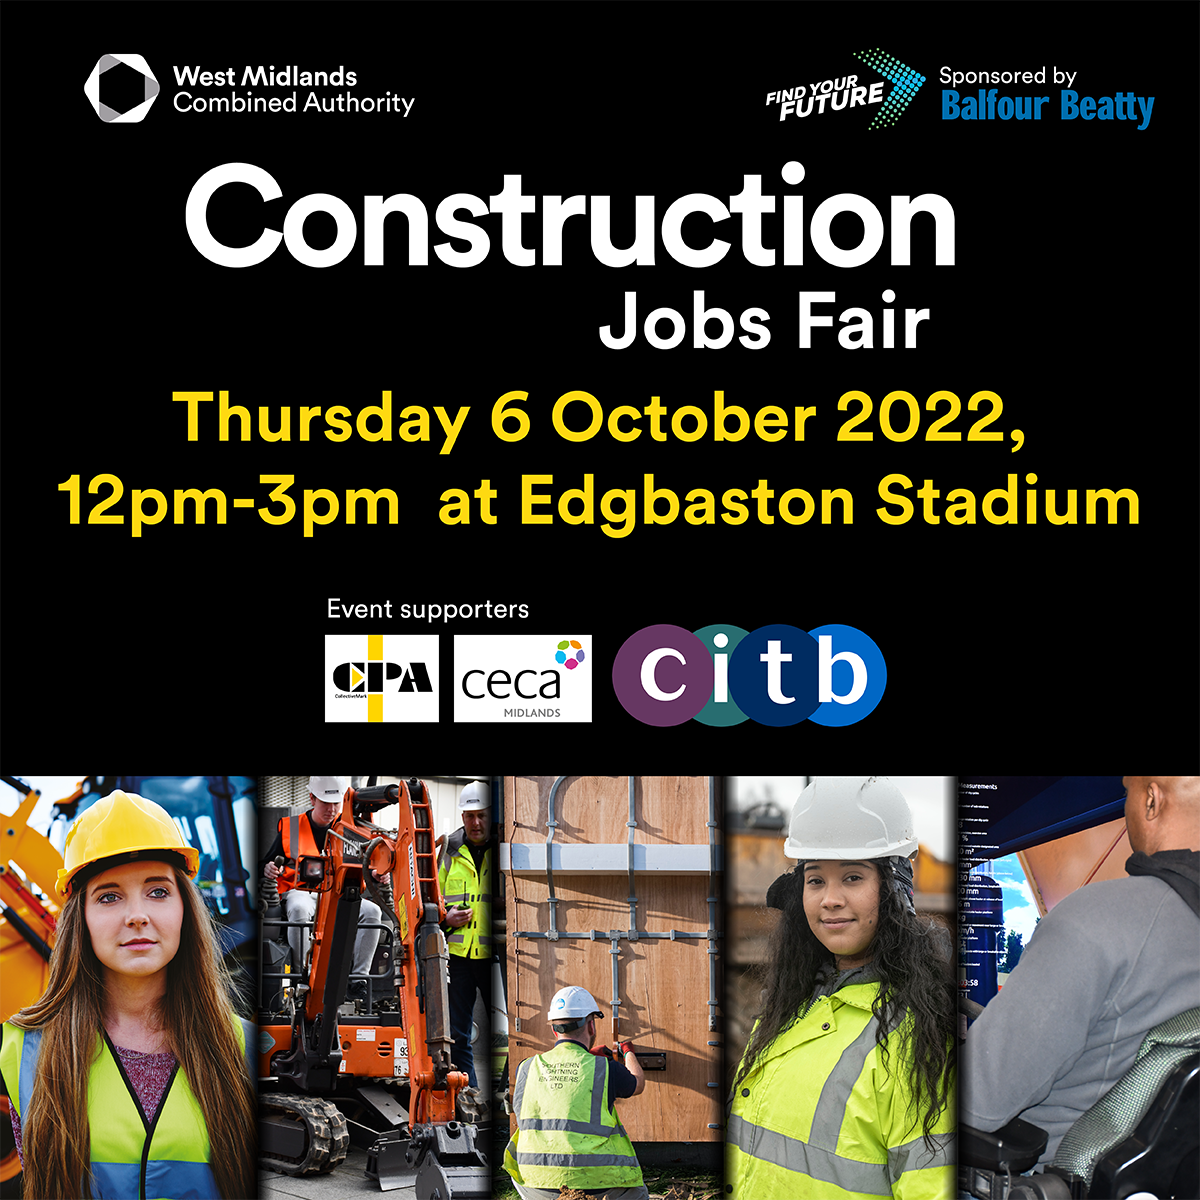 Poster advertising Construction Jobs Fair on October 6th, 2022